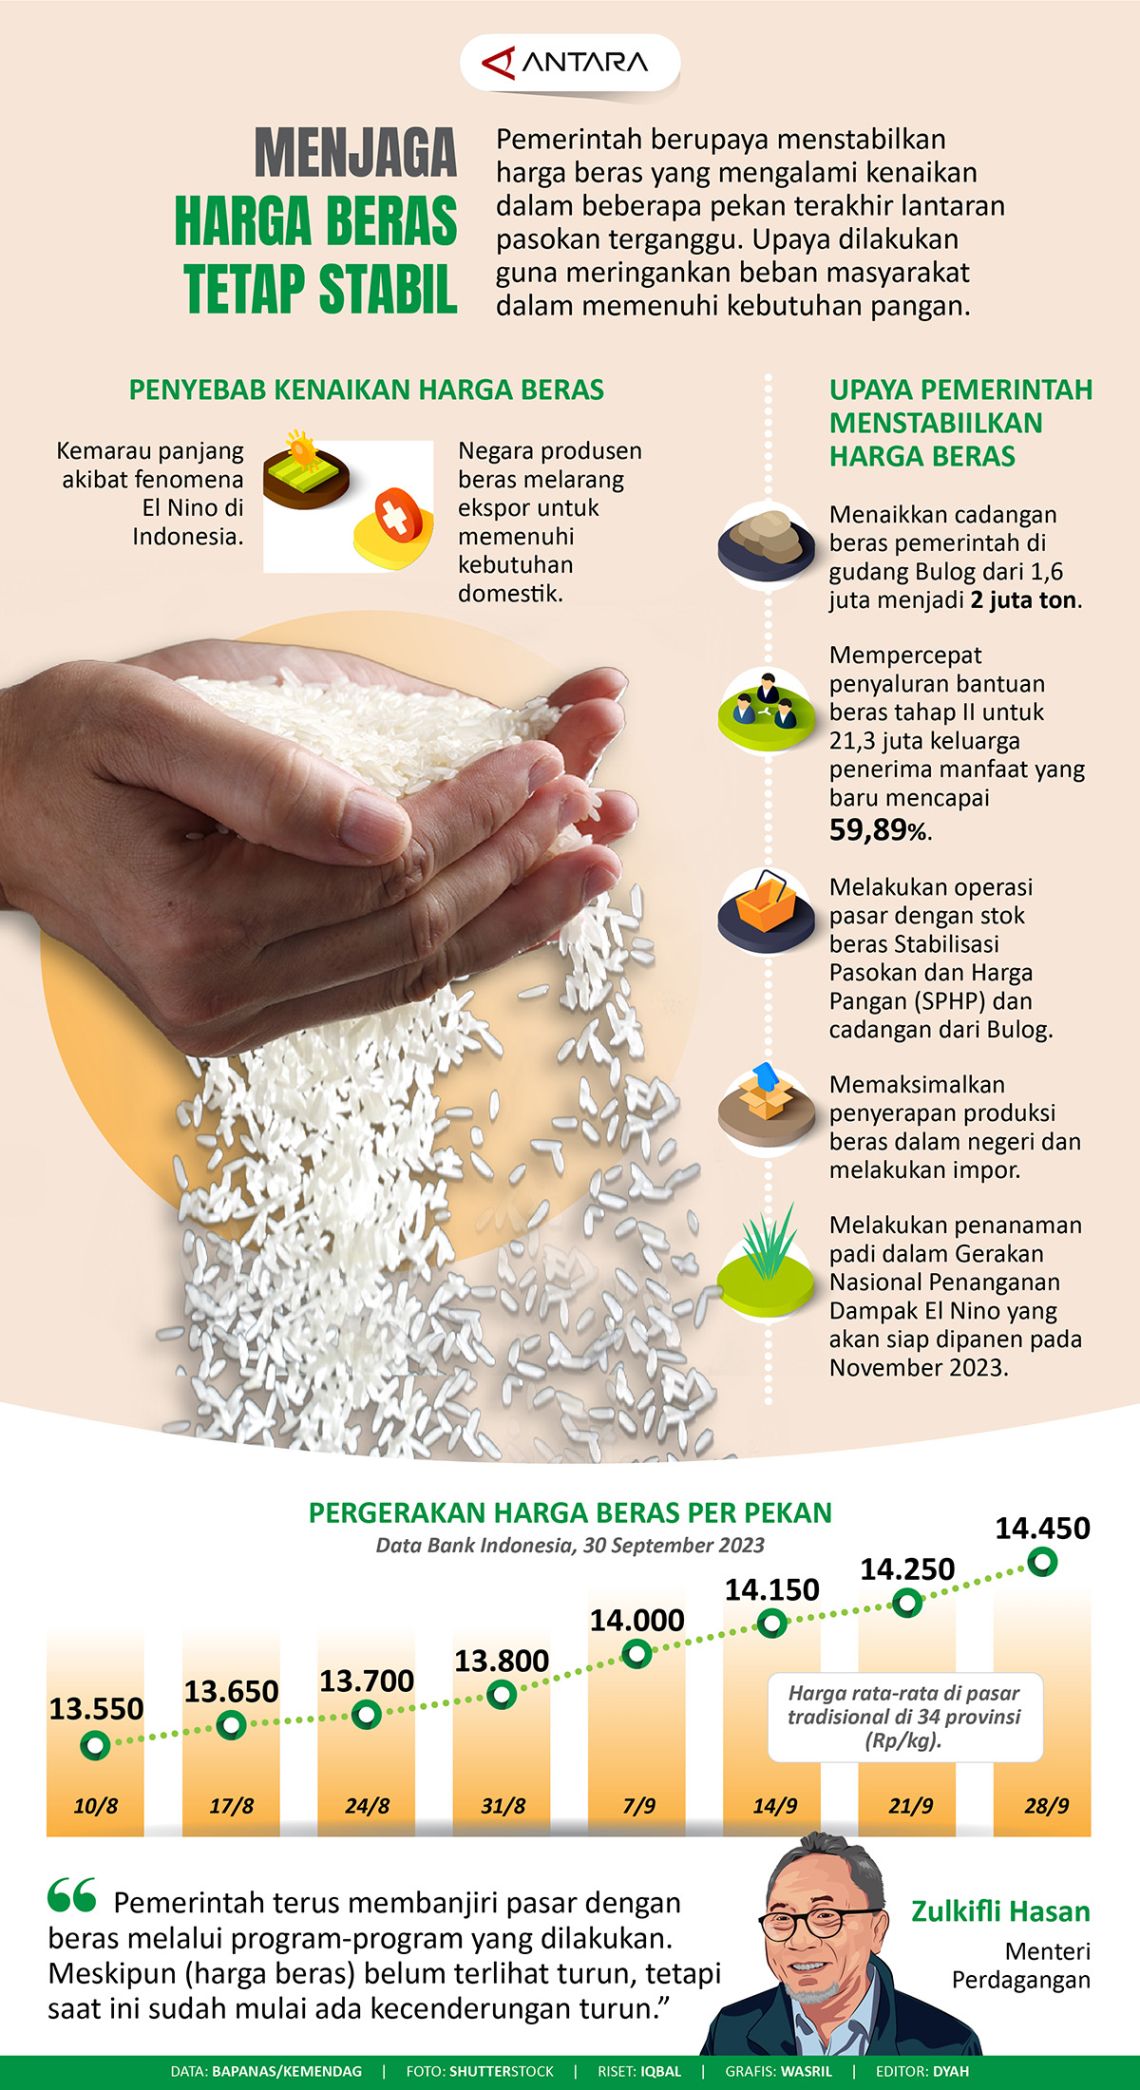 Menjaga tarif jual beras tetap stabil